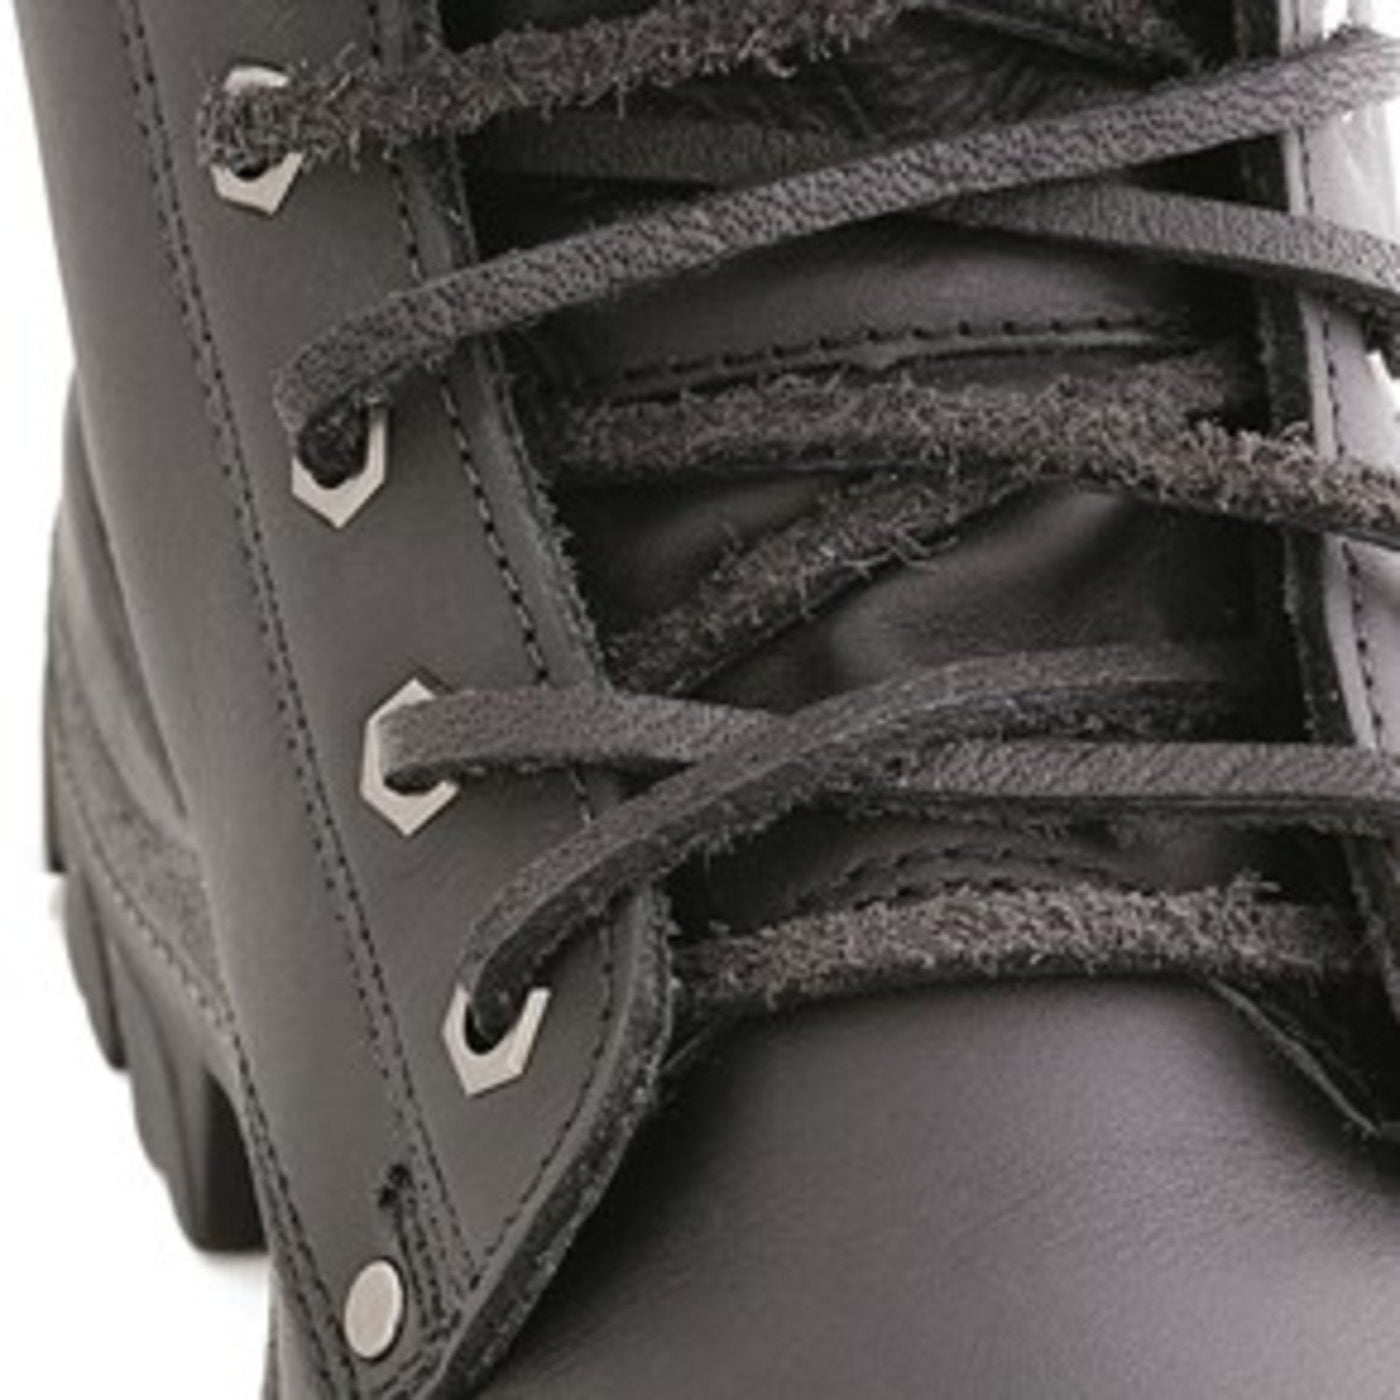 Footwear - Steel Blue Boots Leather Lace 140cm